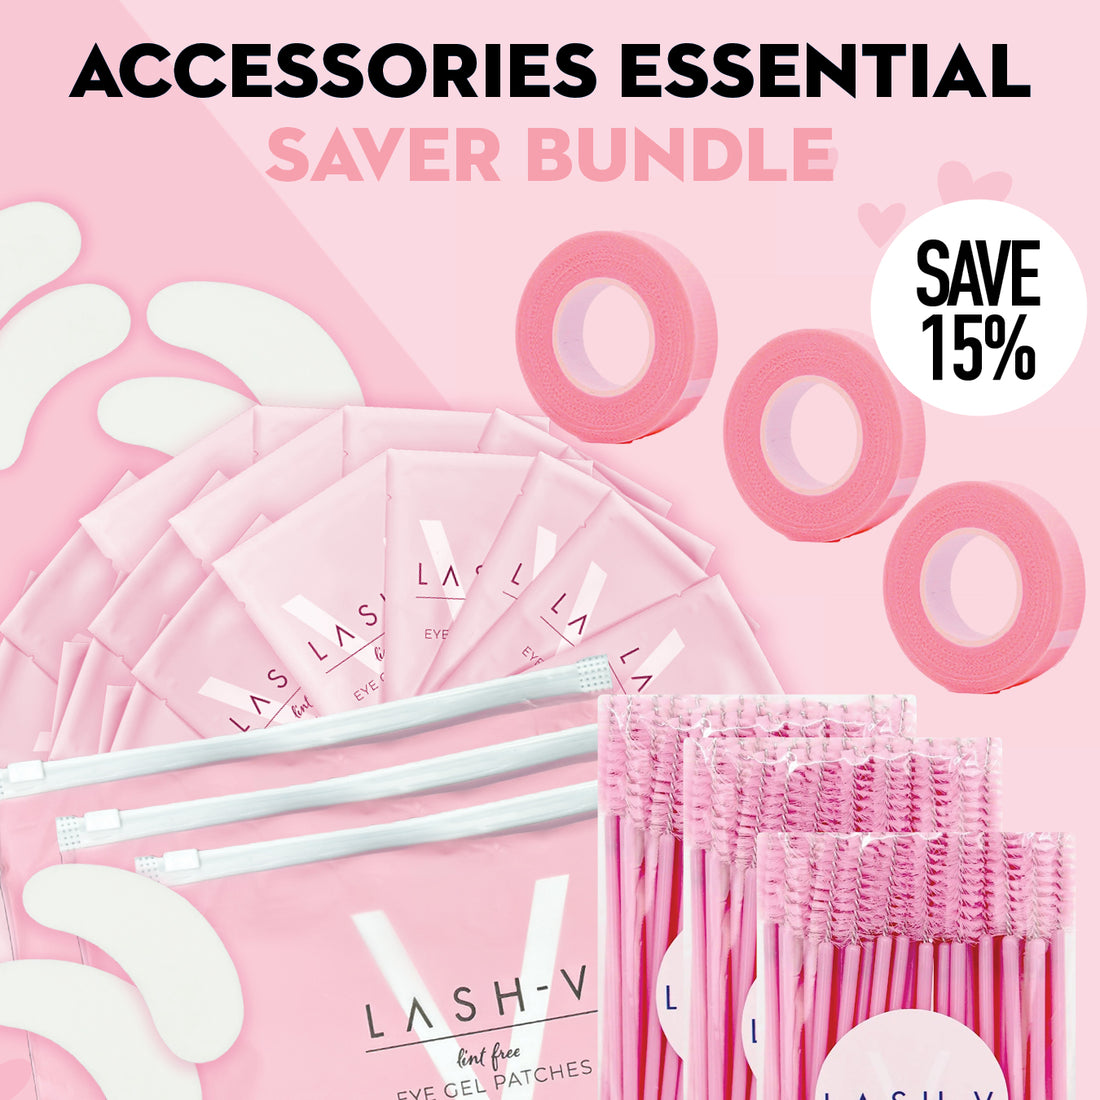 Accessories Essential Pack Saver Bundle - One V Salon